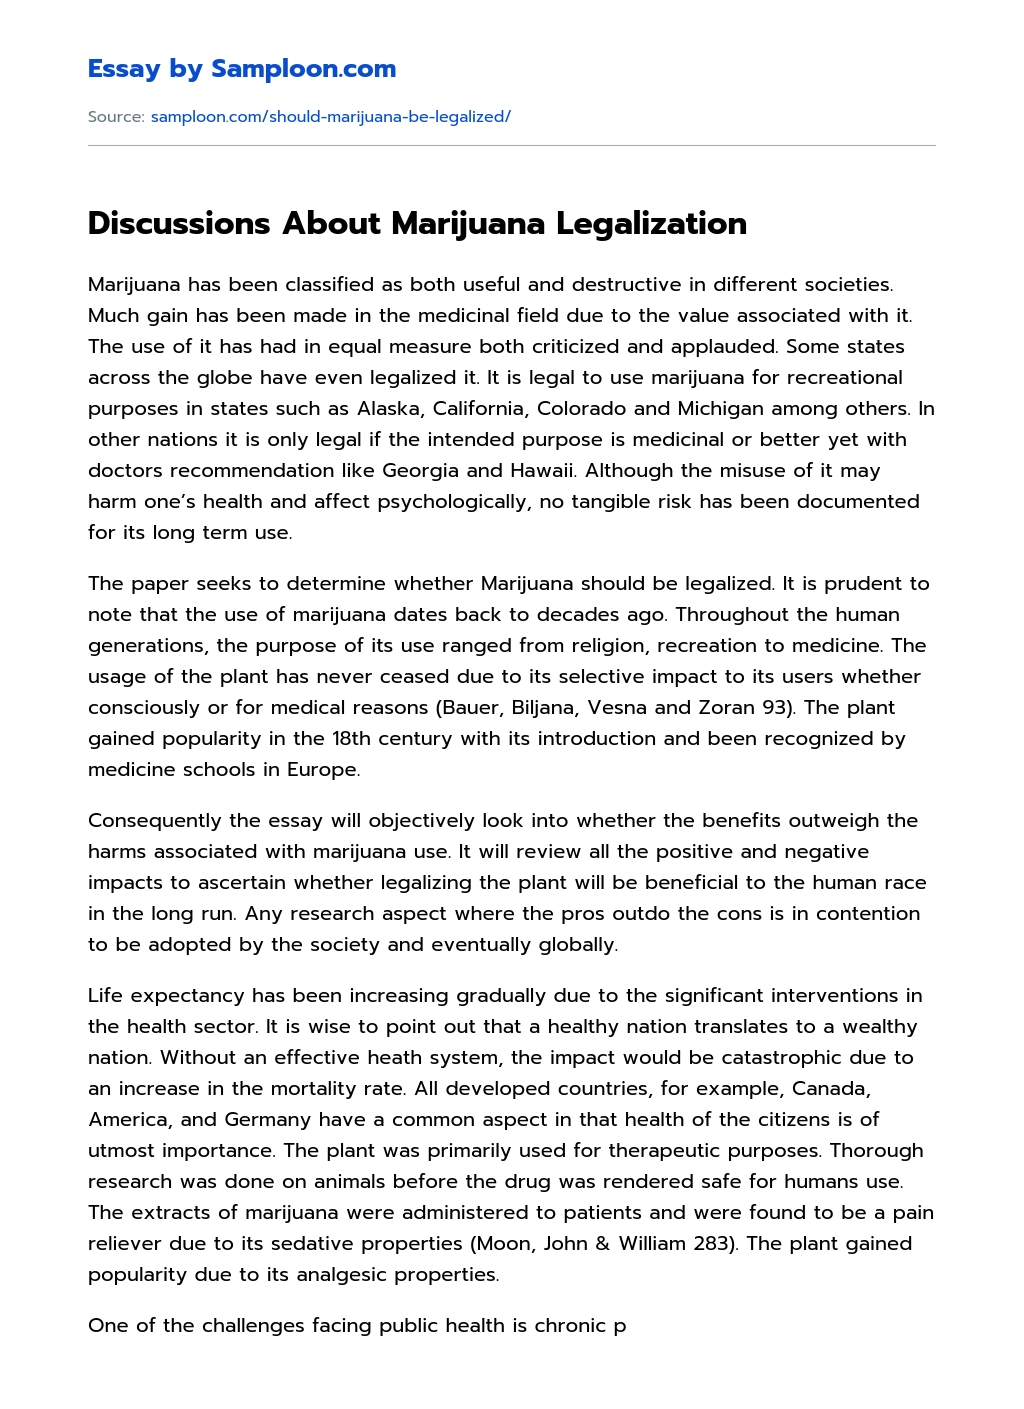 Discussions About Marijuana Legalization essay